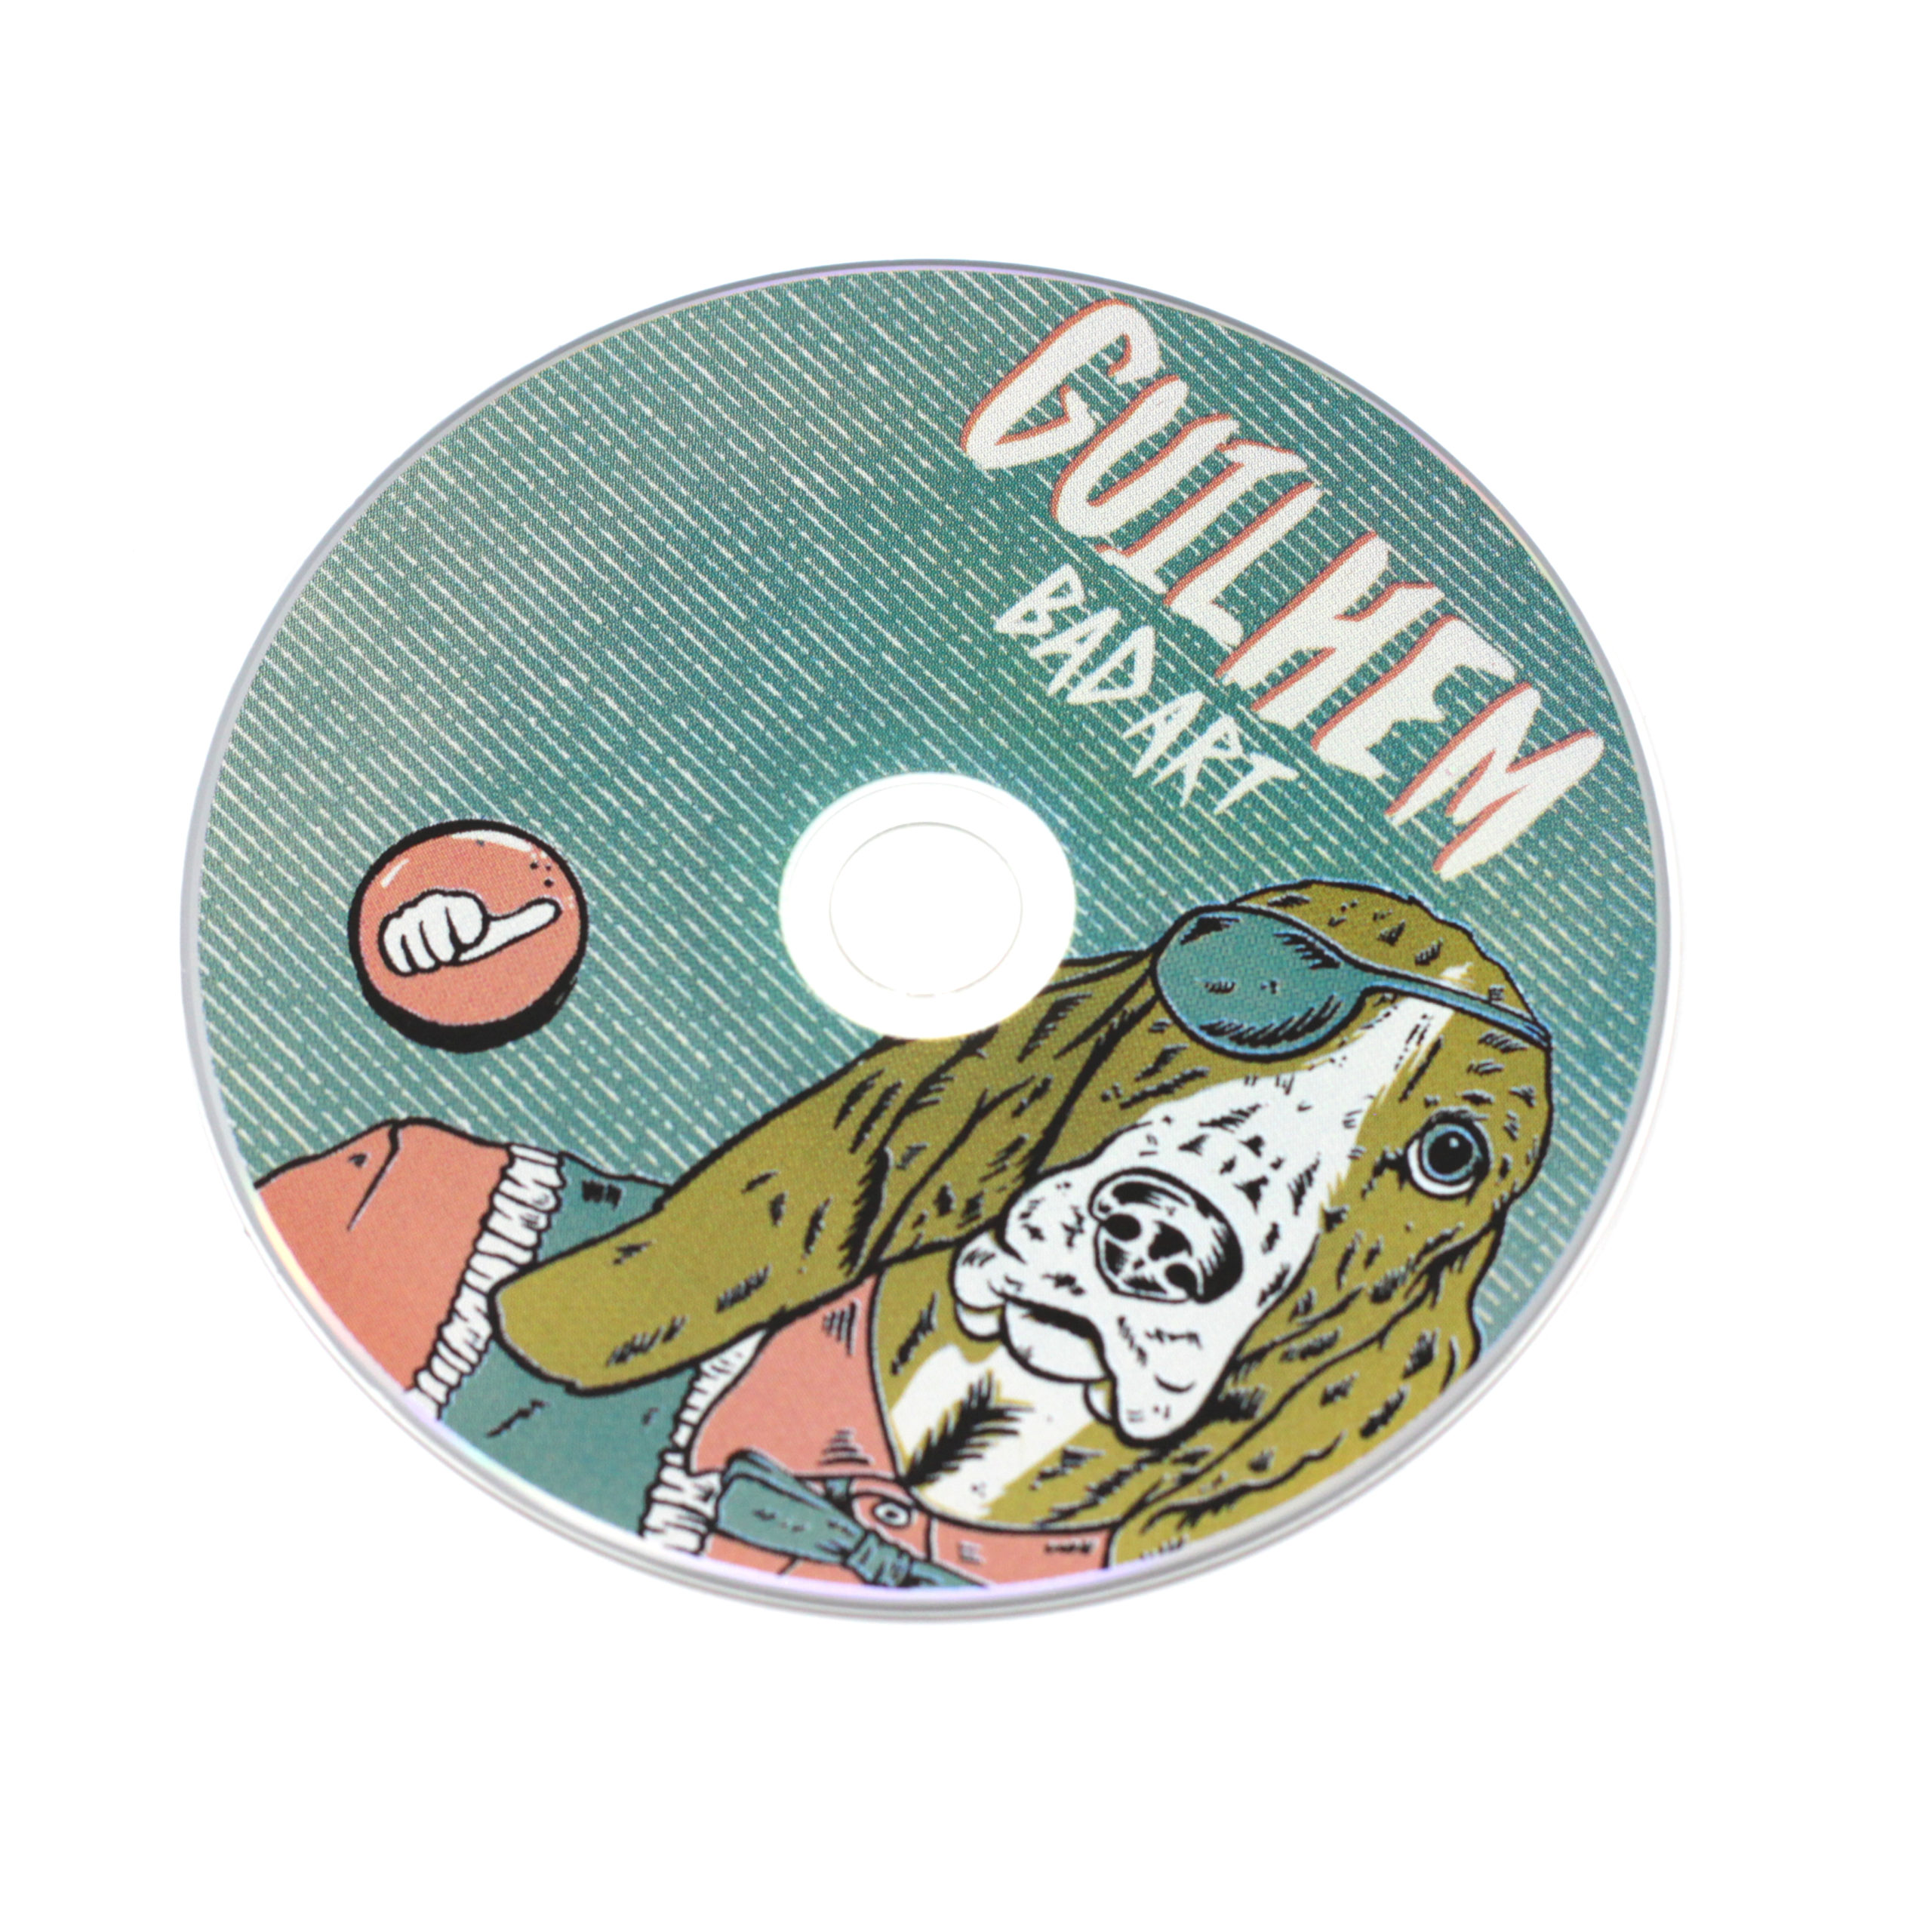 Guilhem “Bad art” CD